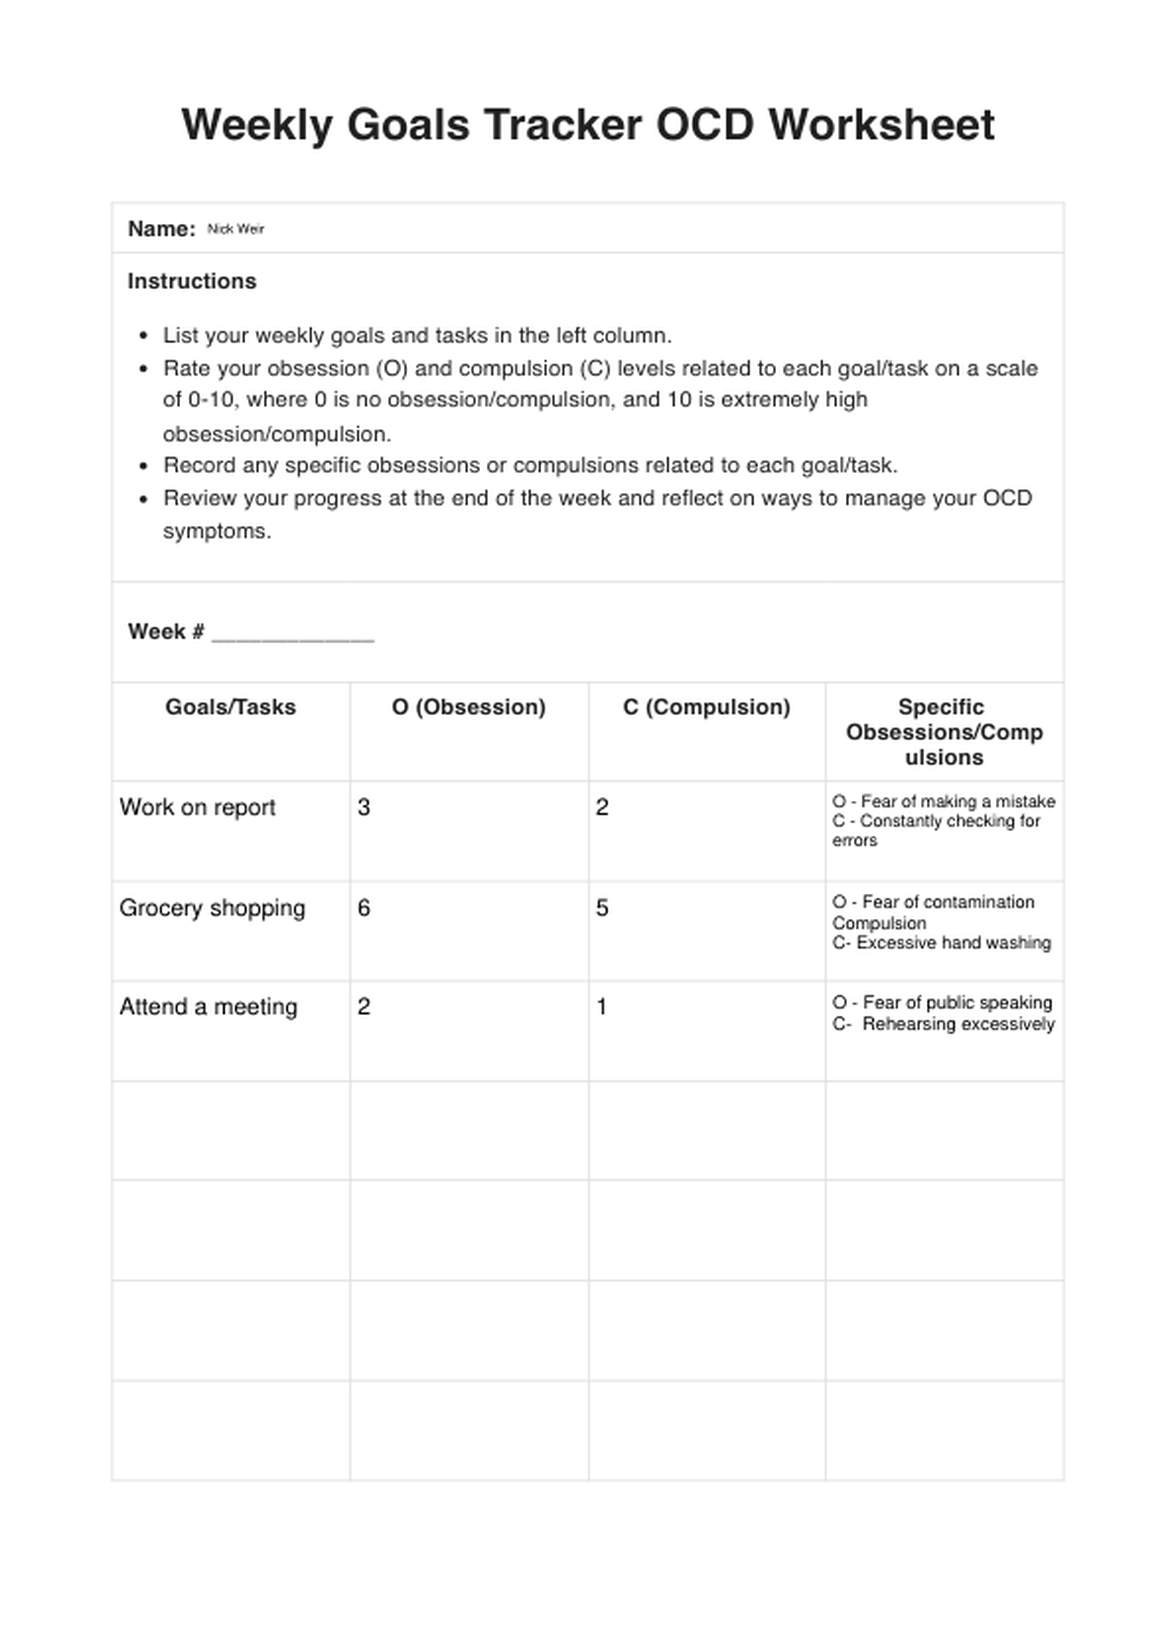 Weekly Goals Tracker OCD Worksheets PDF Example